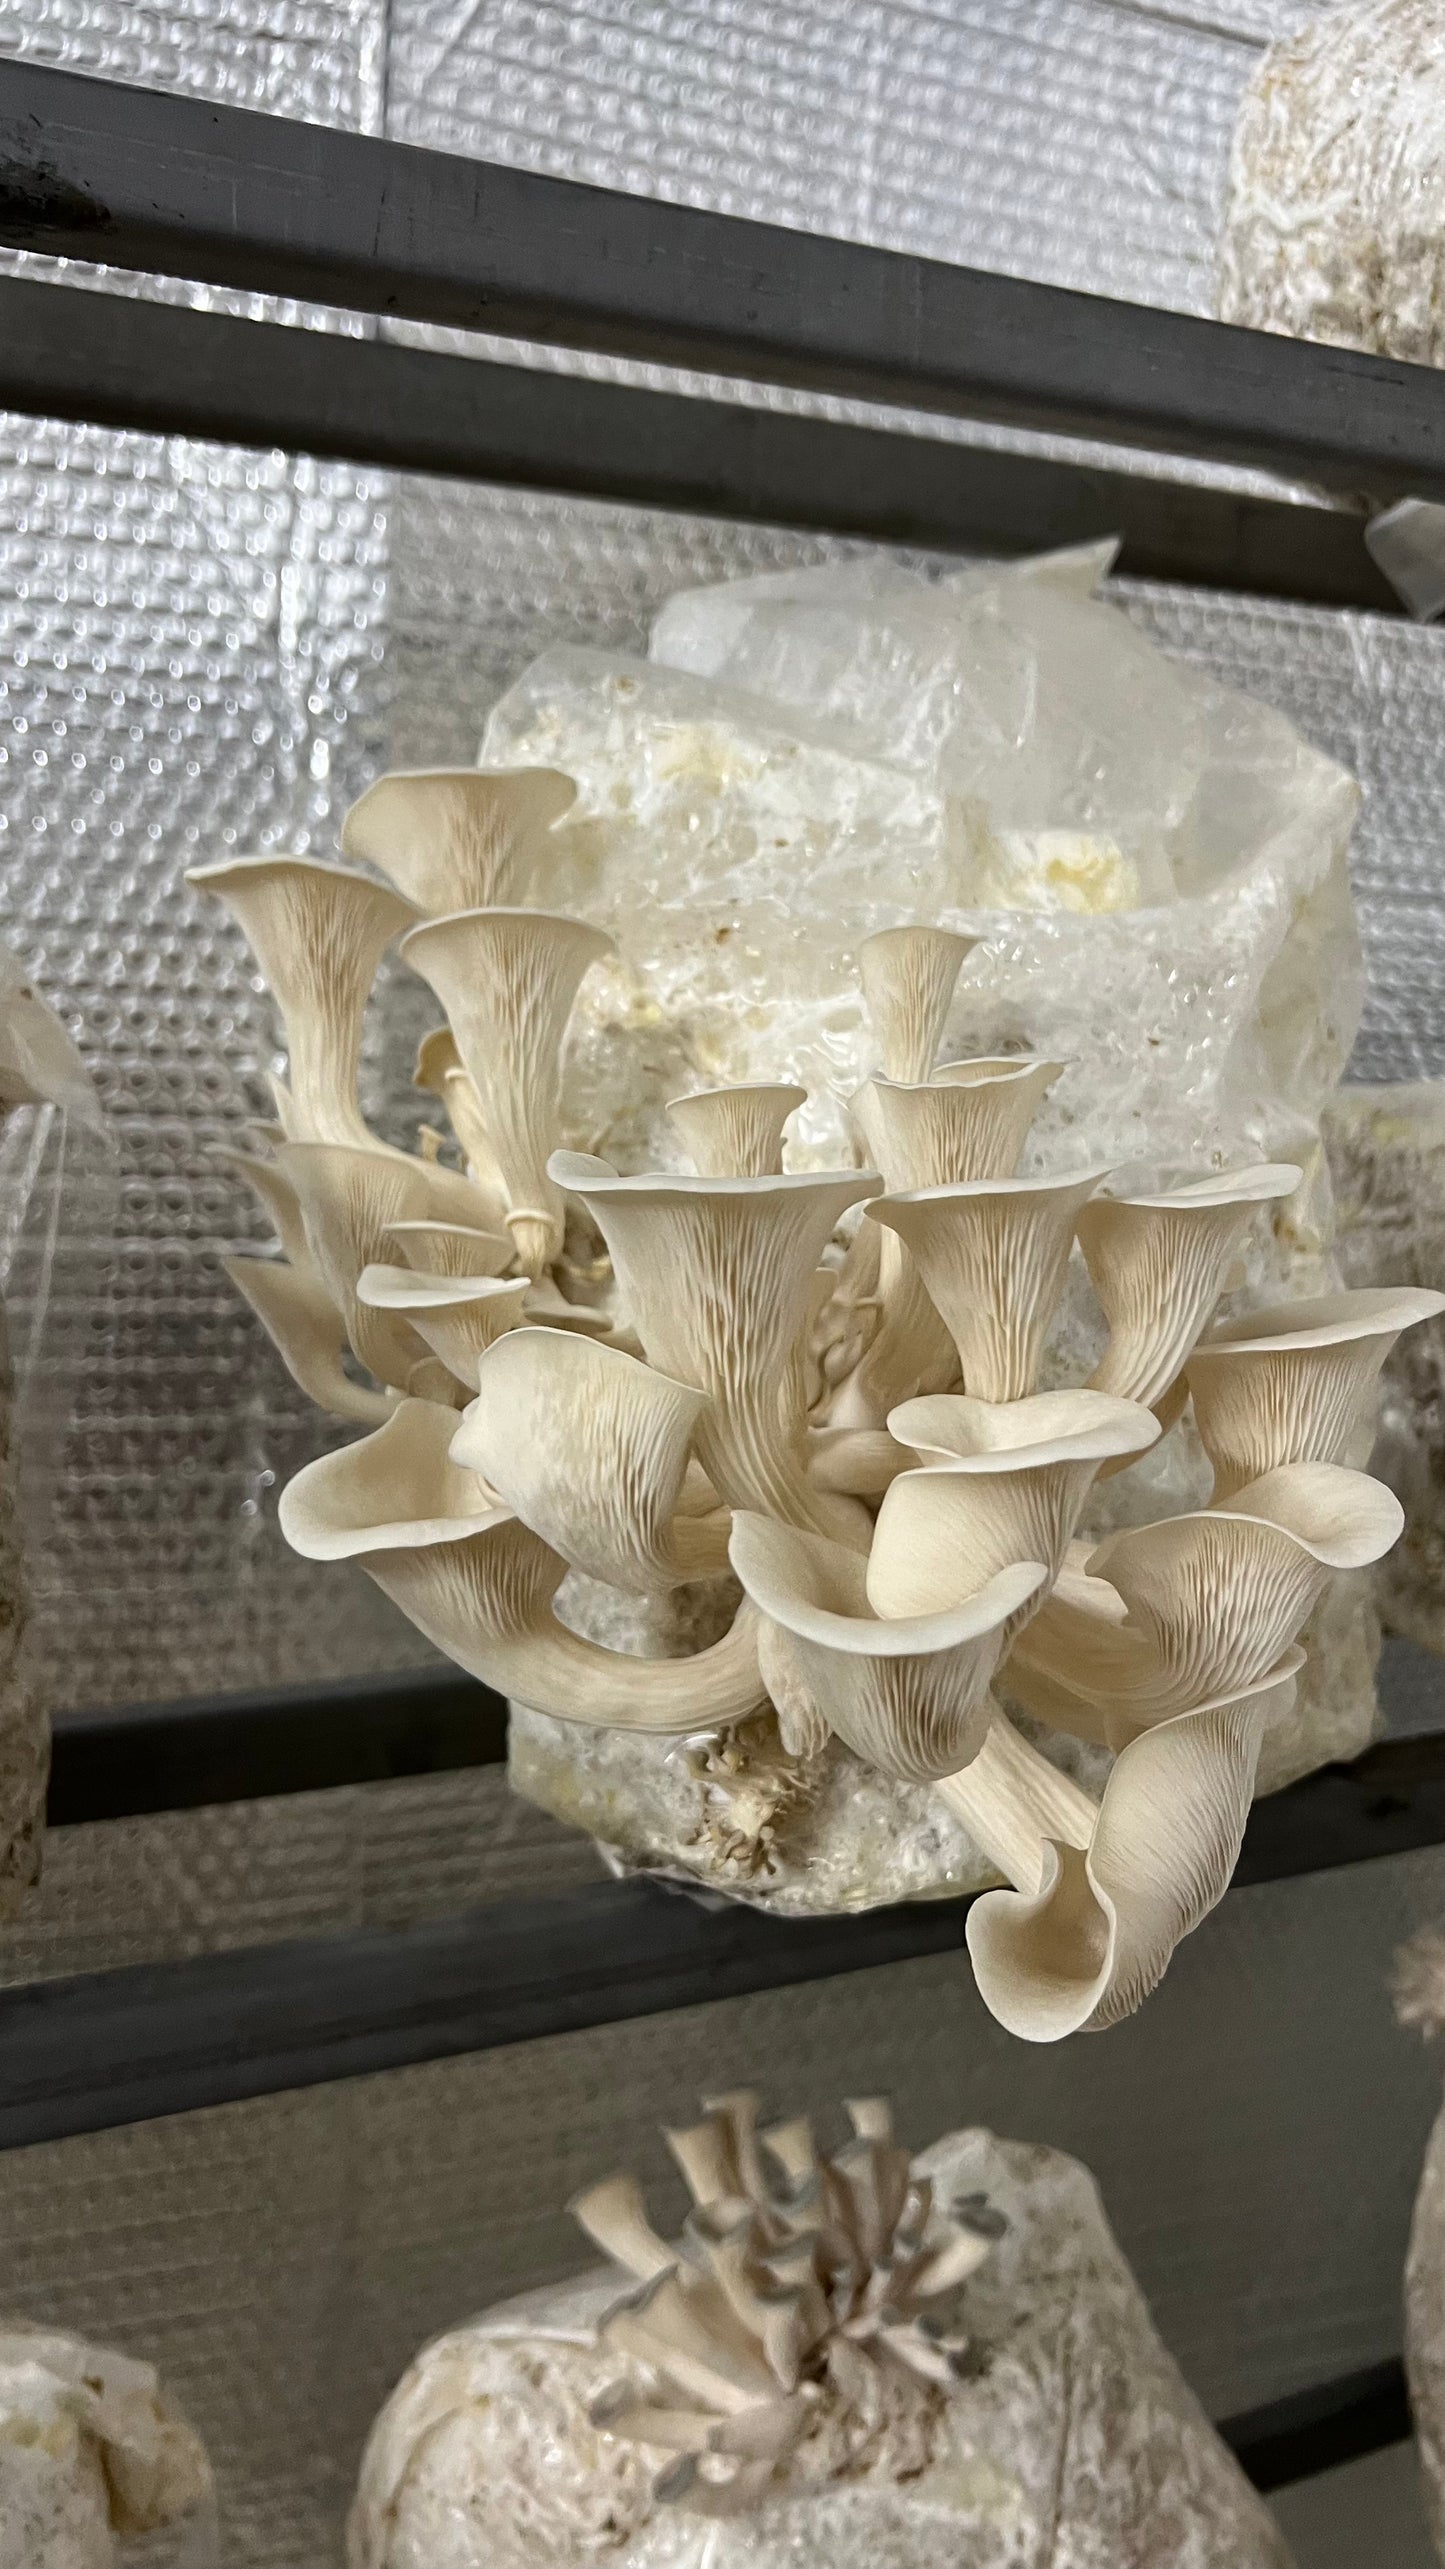 Starter Mushroom grow Kit